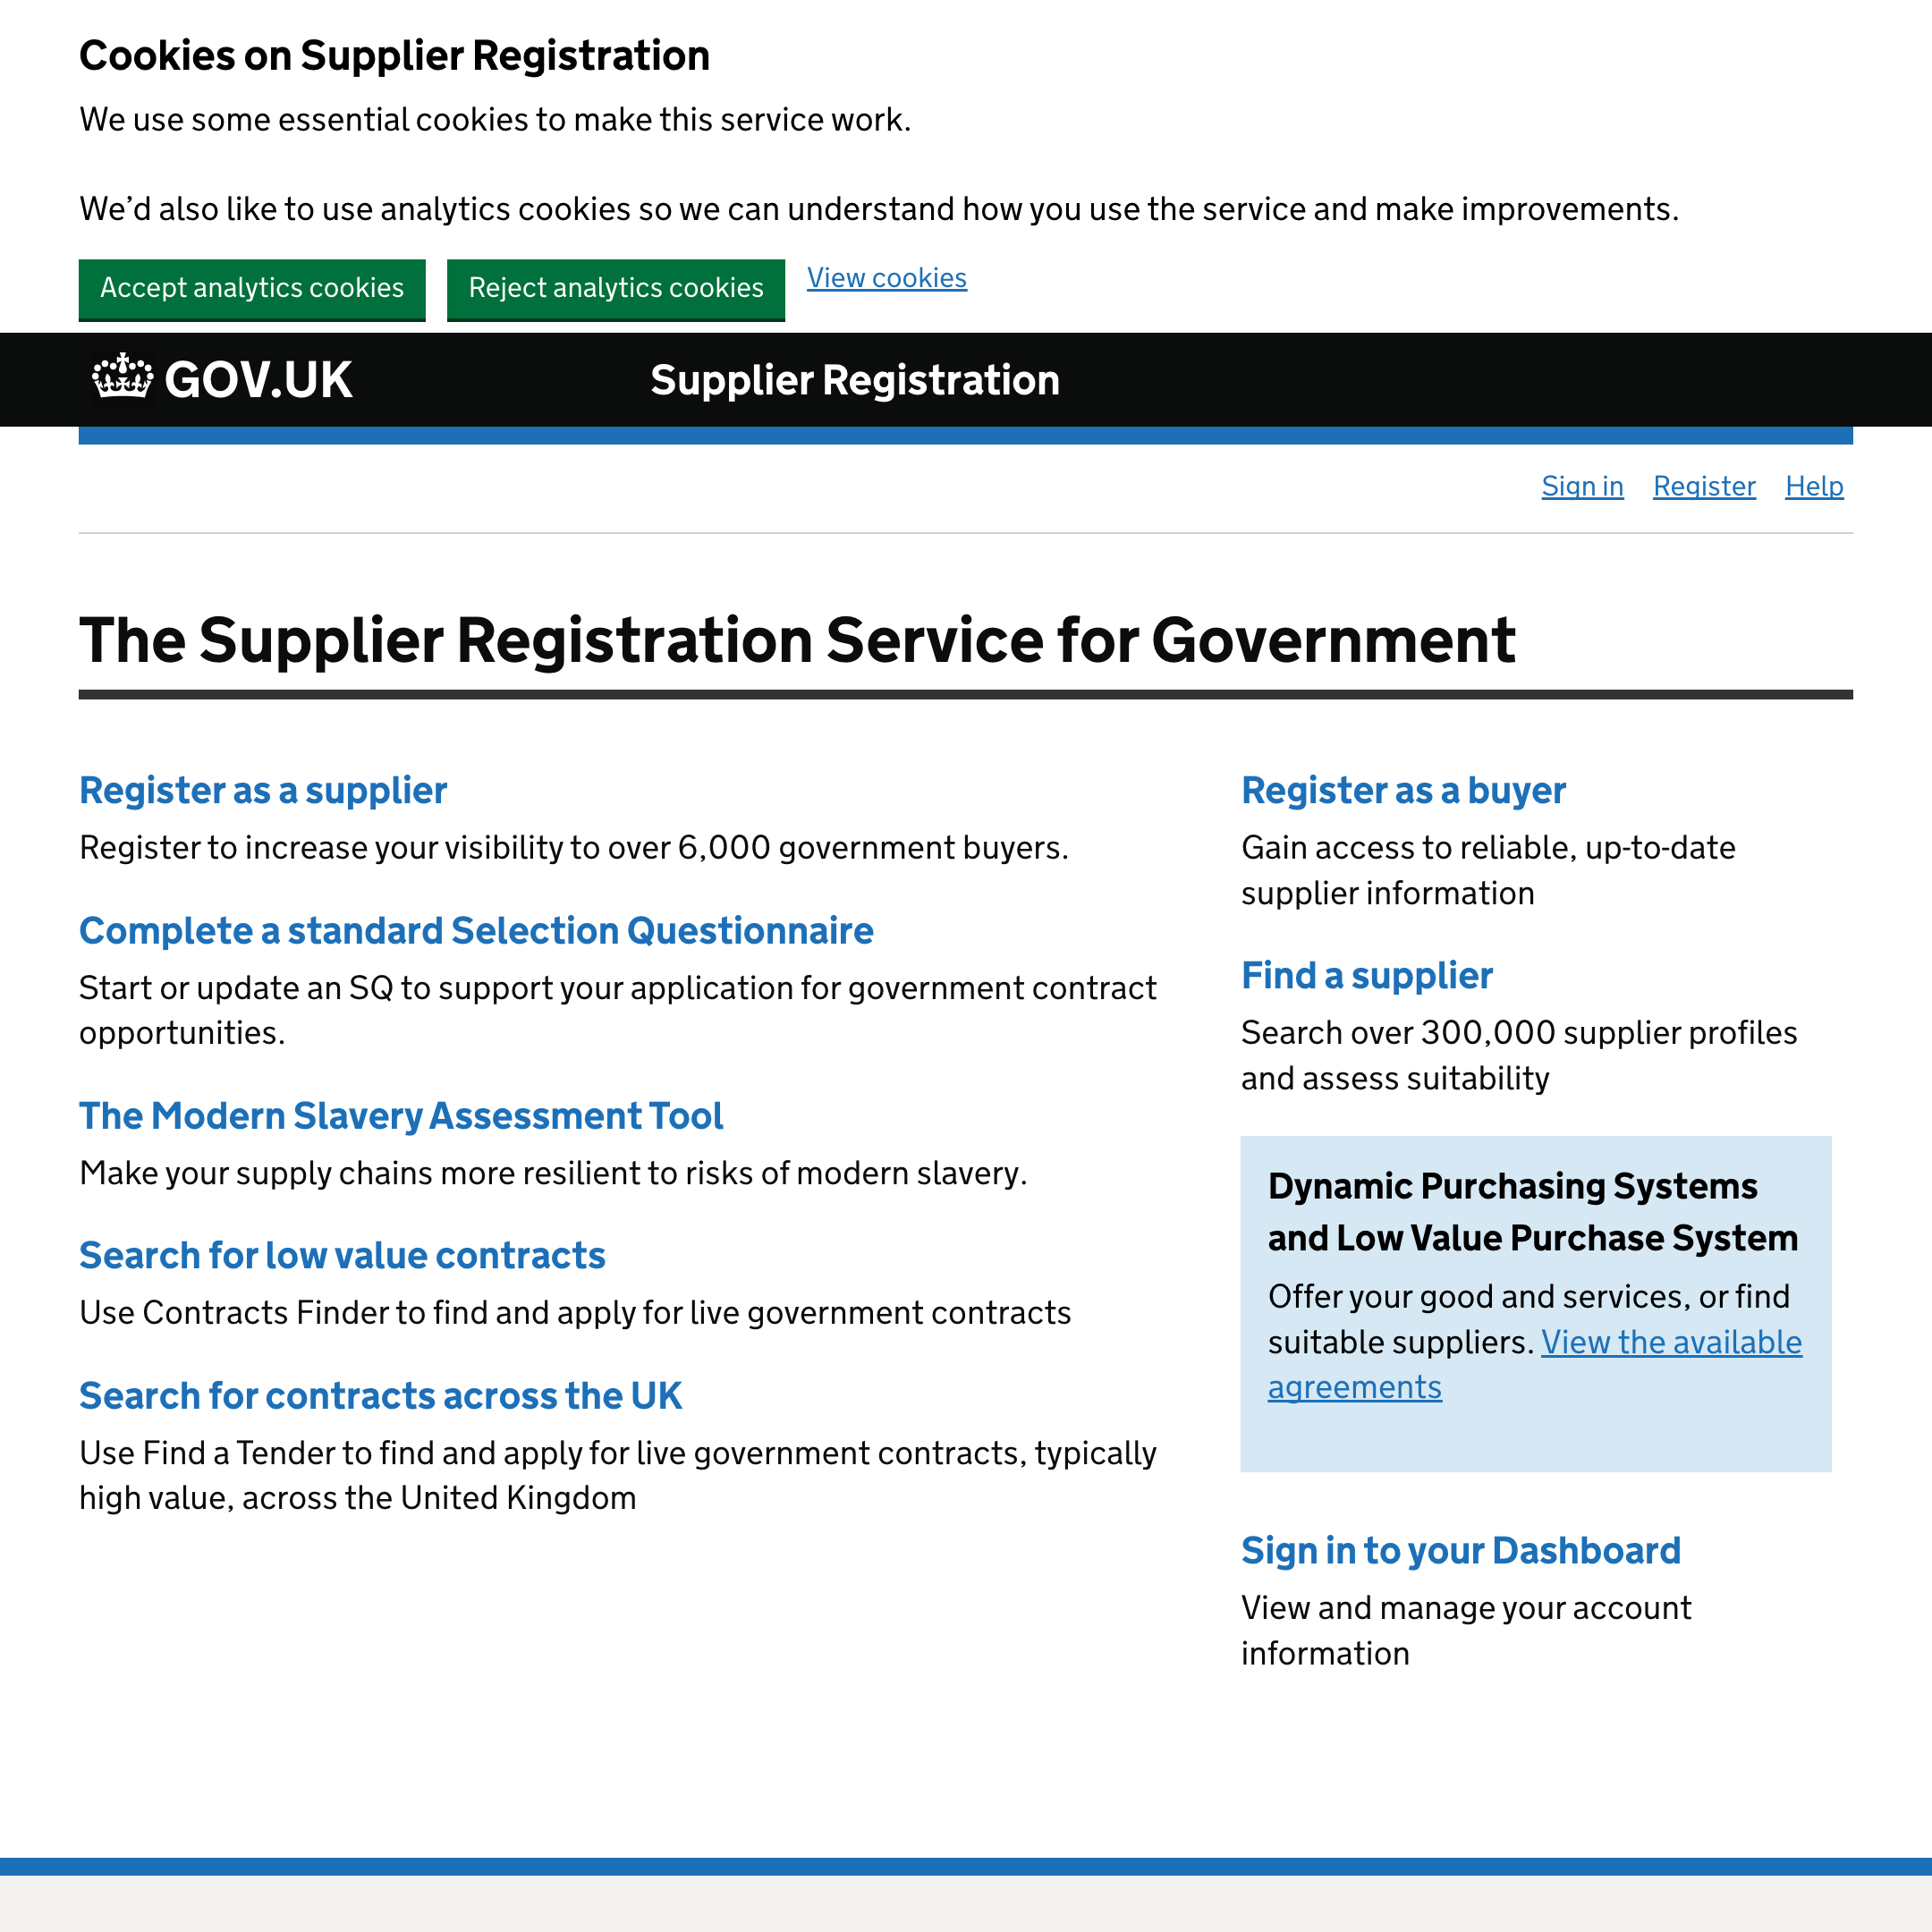 Supplier Registration